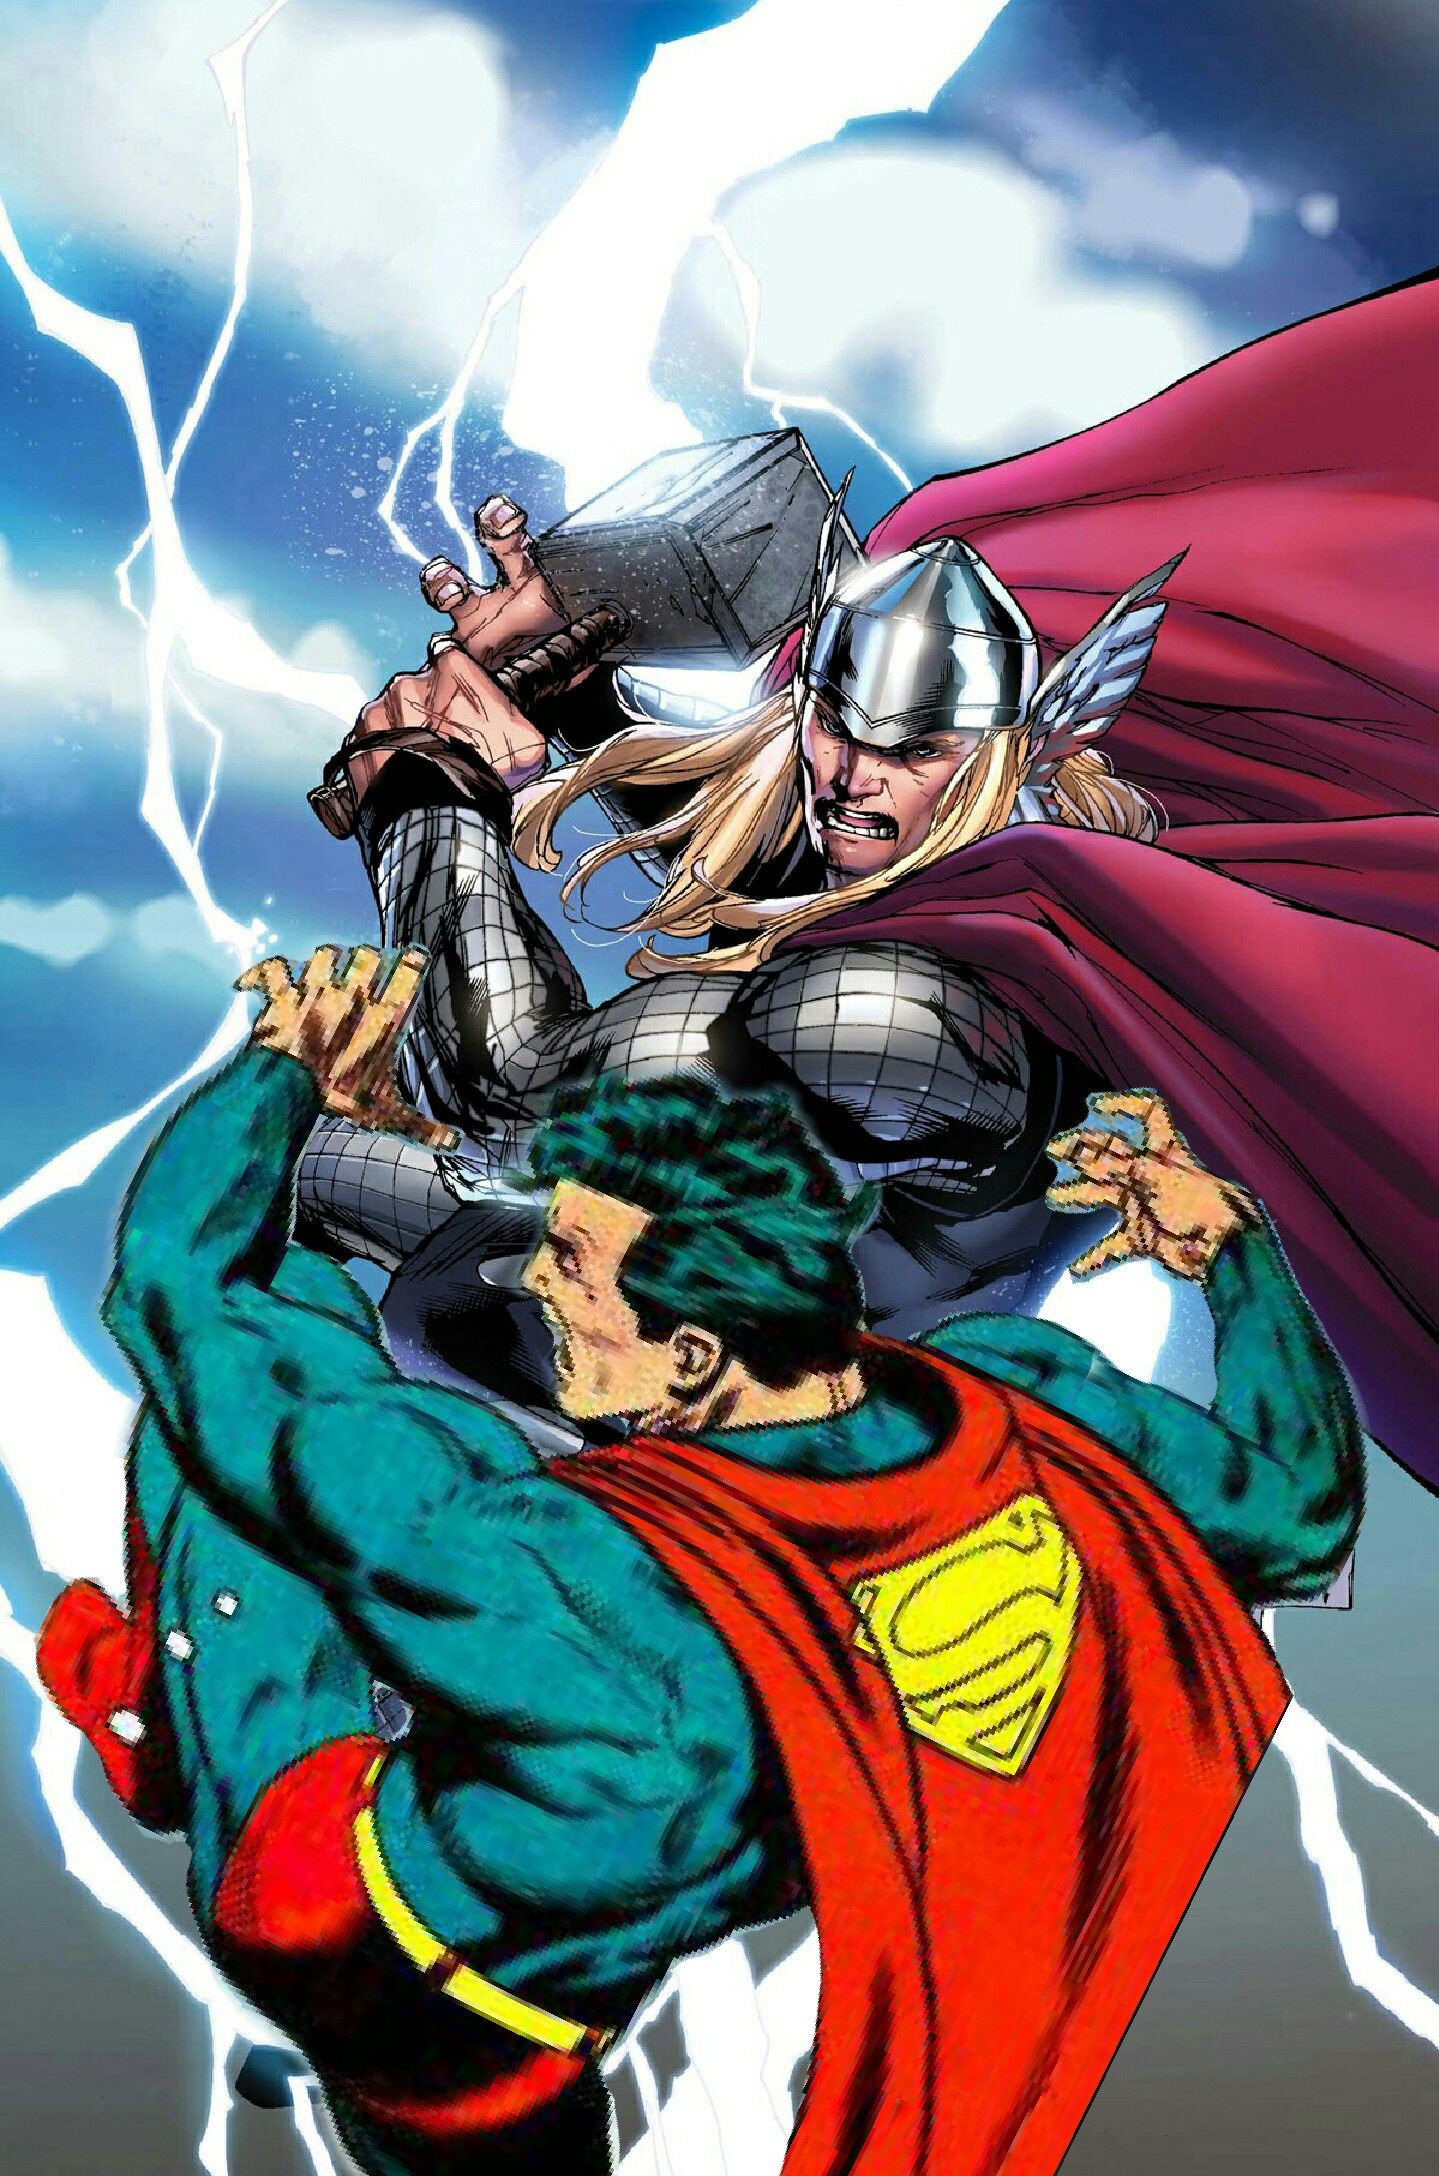 Thor vs Superman ideas. thor vs superman, thor, marvel vs dc